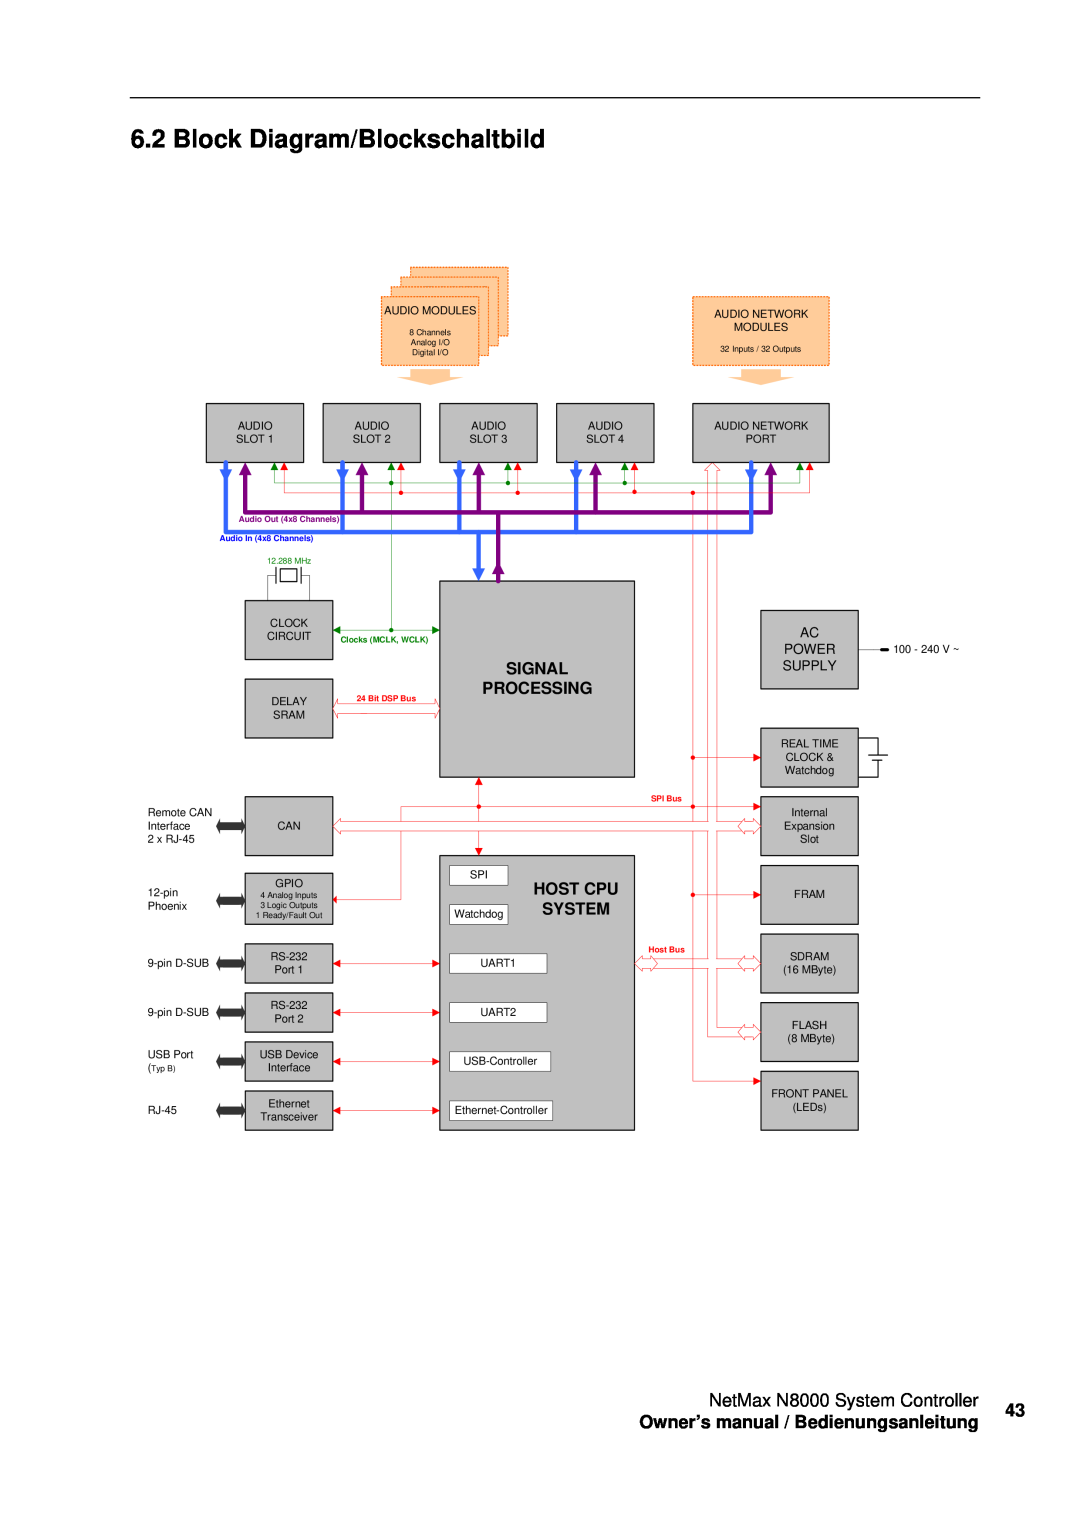 Electro-Voice Block Diagram/Blockschaltbild, NetMax N8000 System Controller, Signal, Processing, Host Cpu, Power 